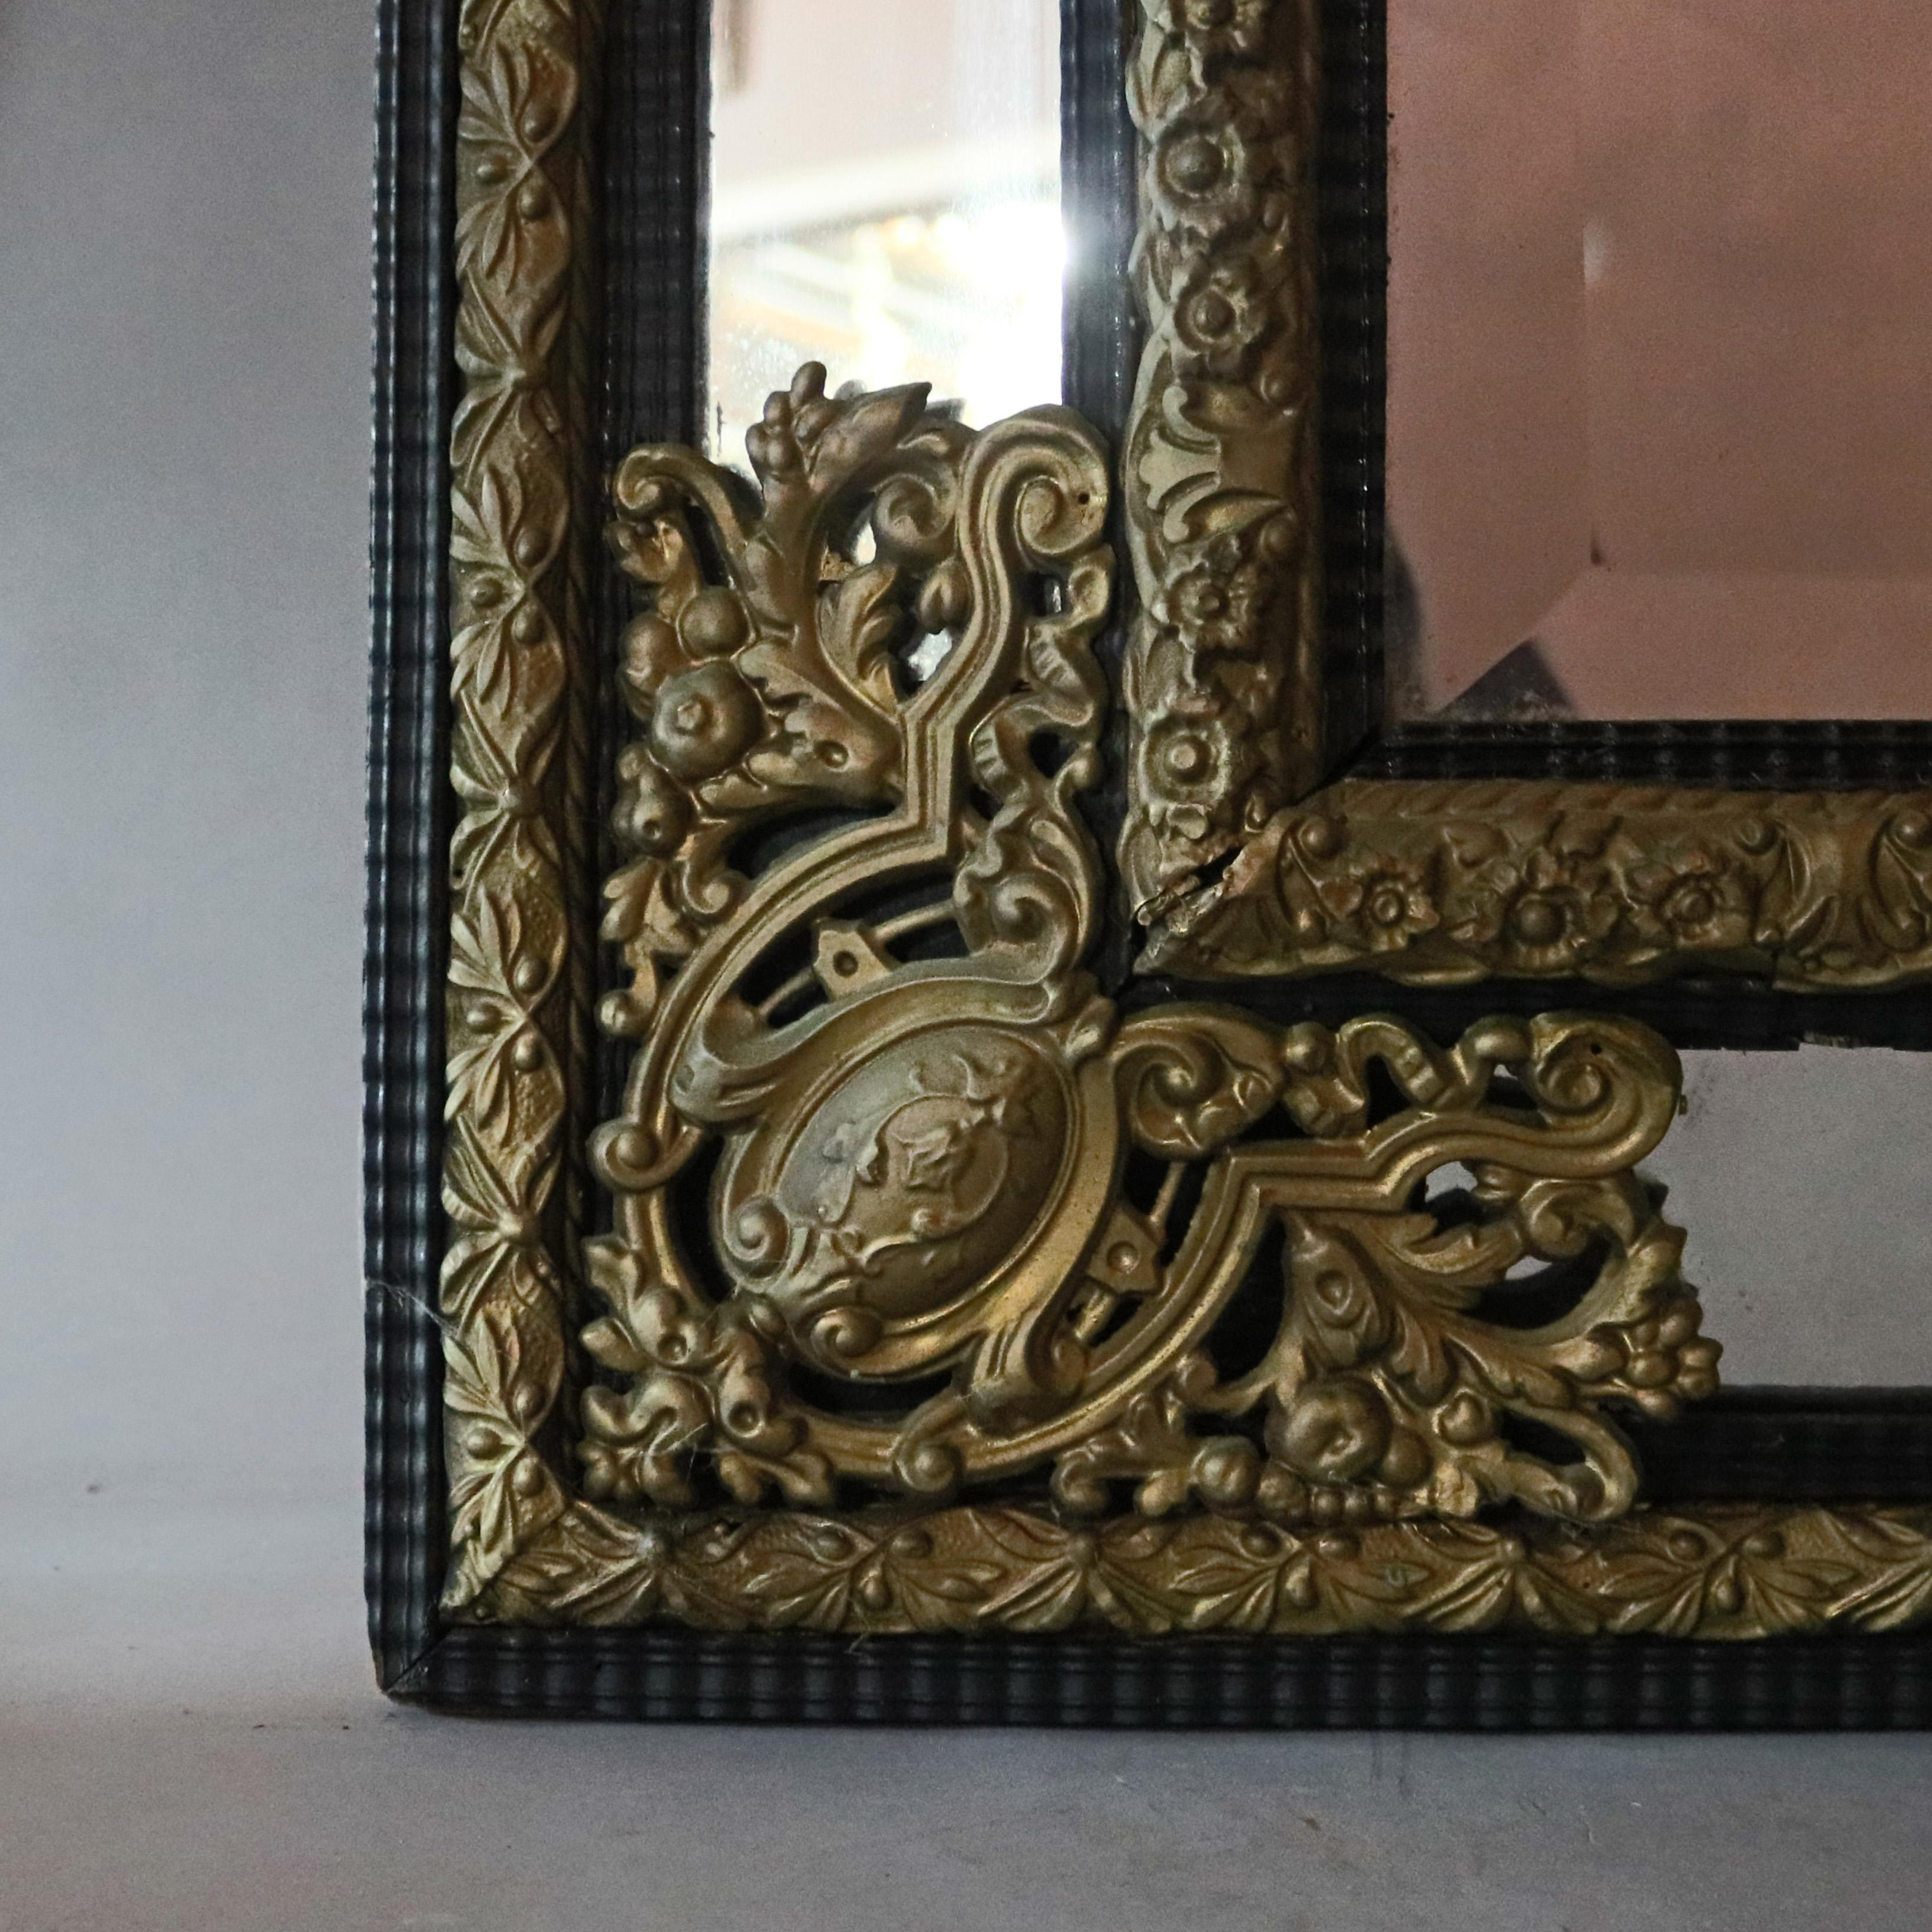 European Antique Baroque Ebonized Wood & Bronzed Filigree Parclose Wall Mirror circa 1890